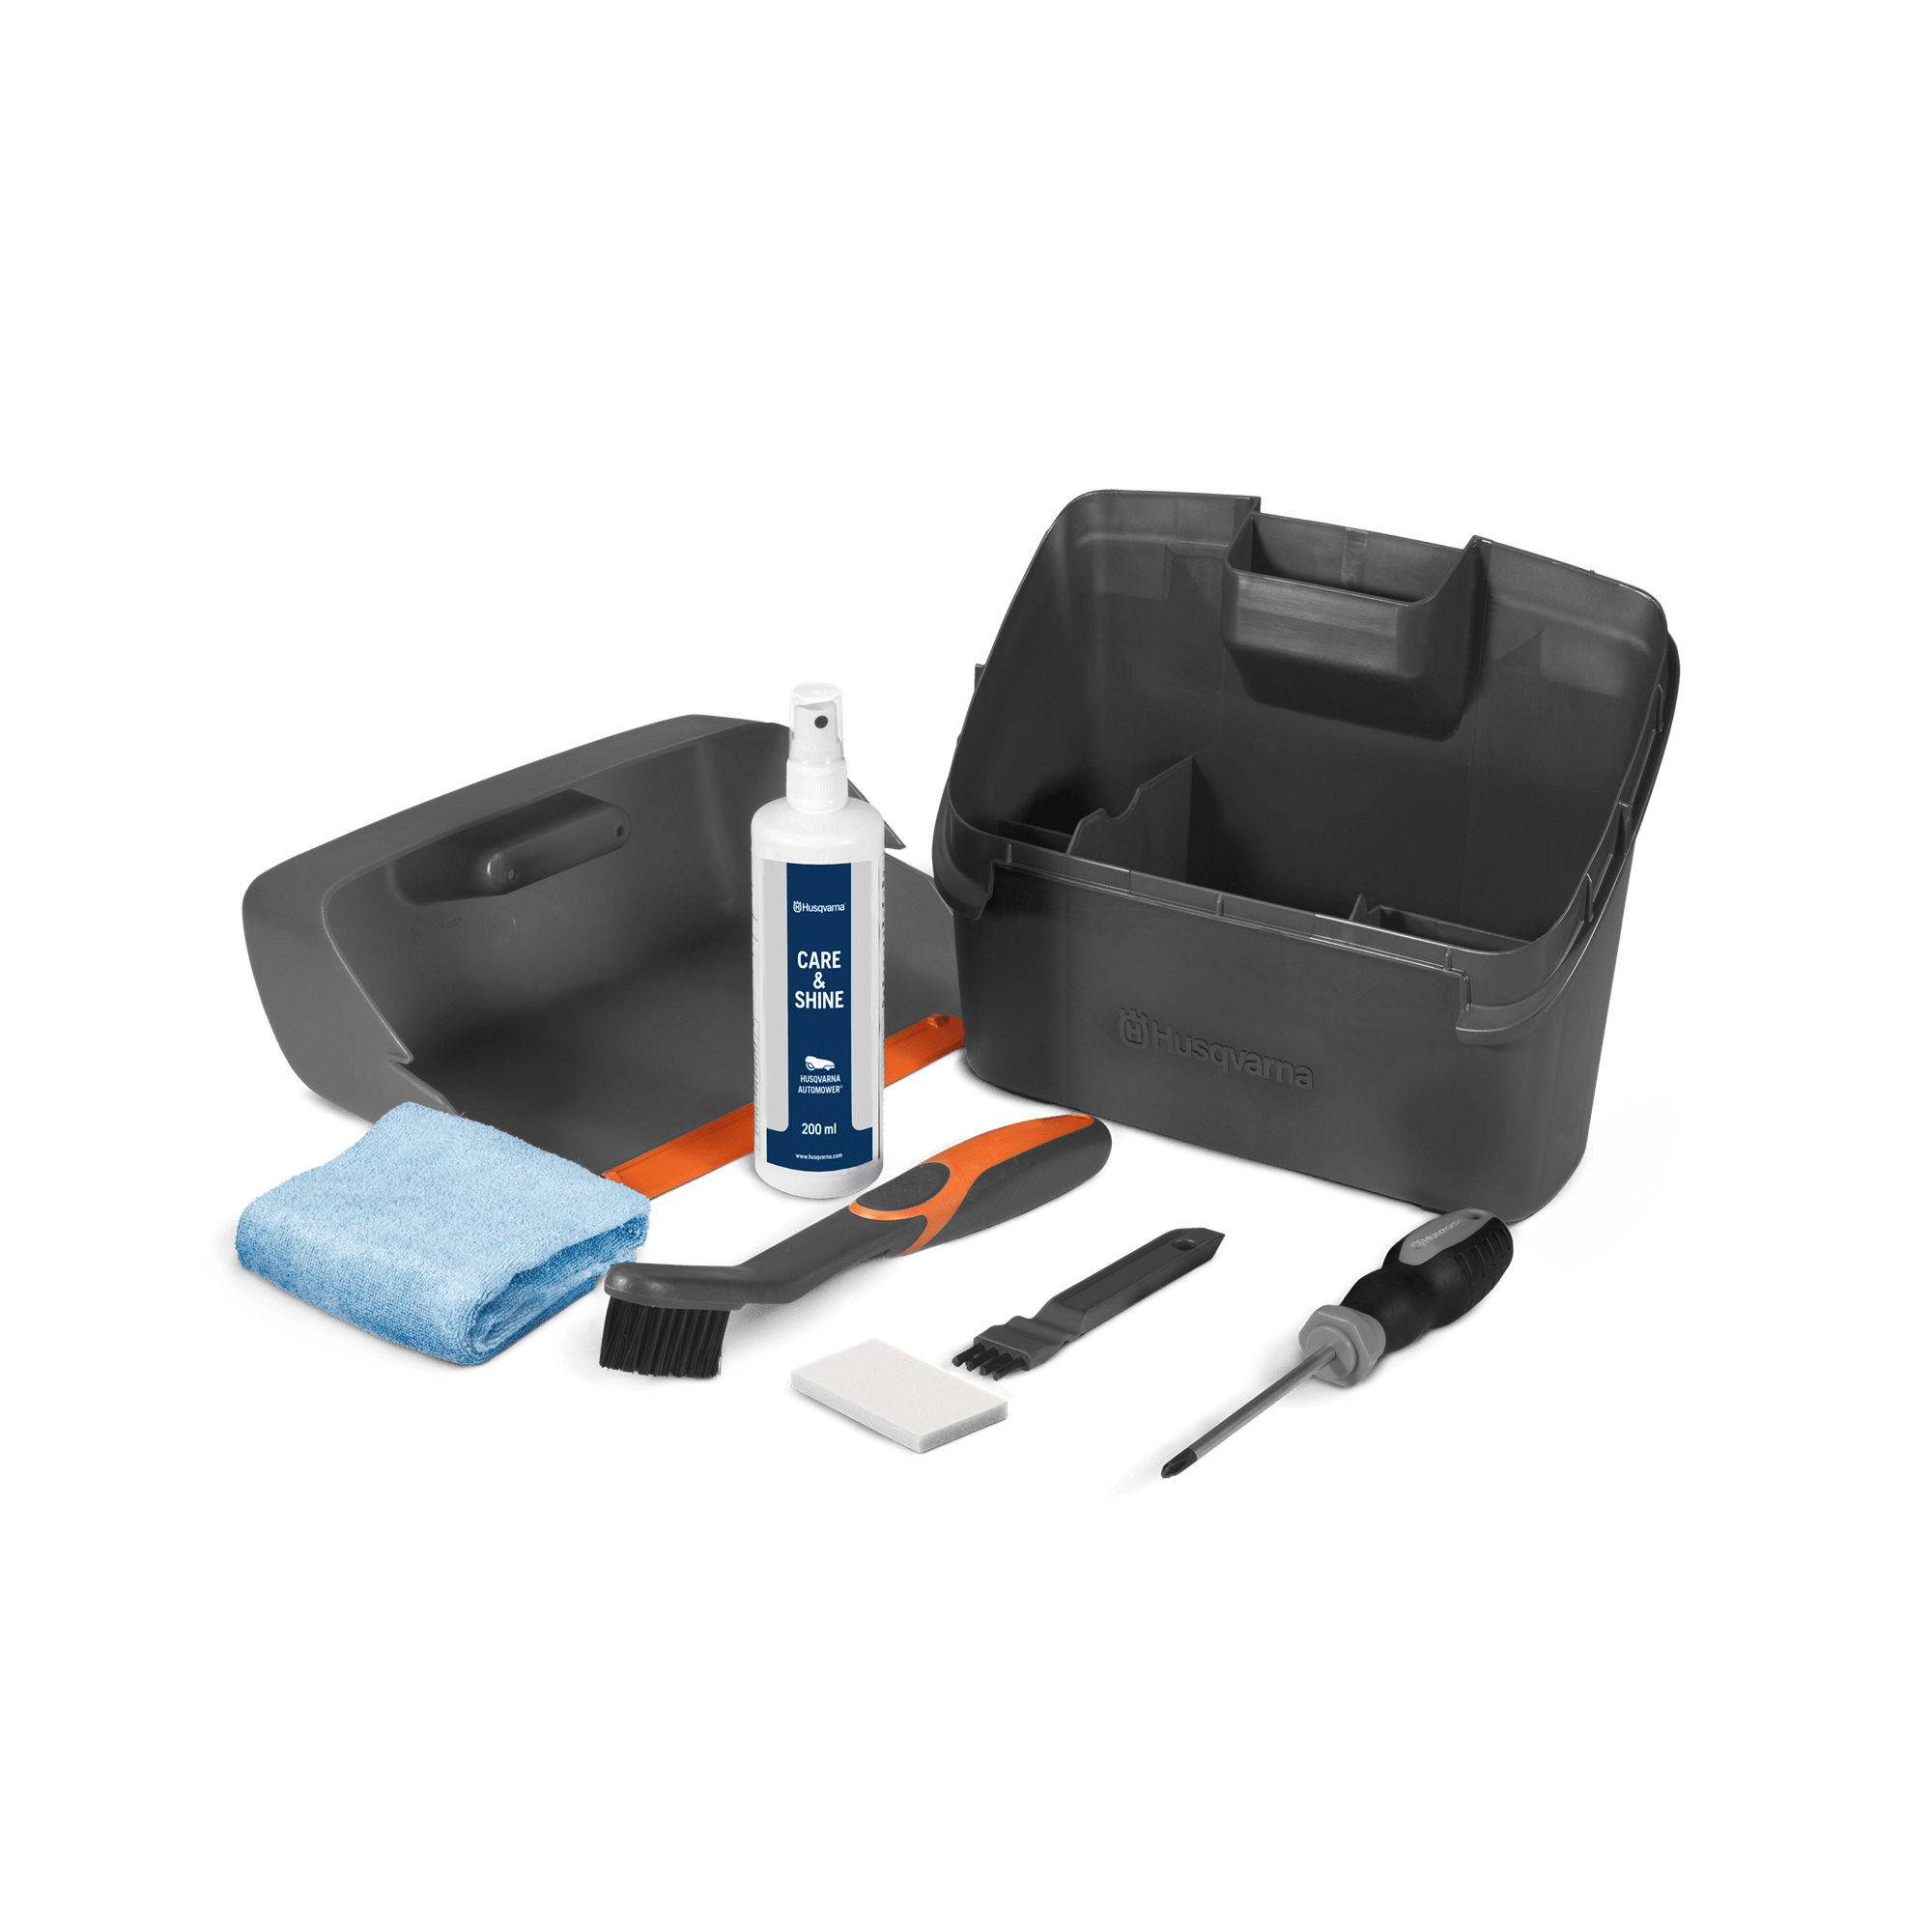 Image for Husqvarna Automower® Cleaning & Maintenance Kit from HusqvarnaB2C